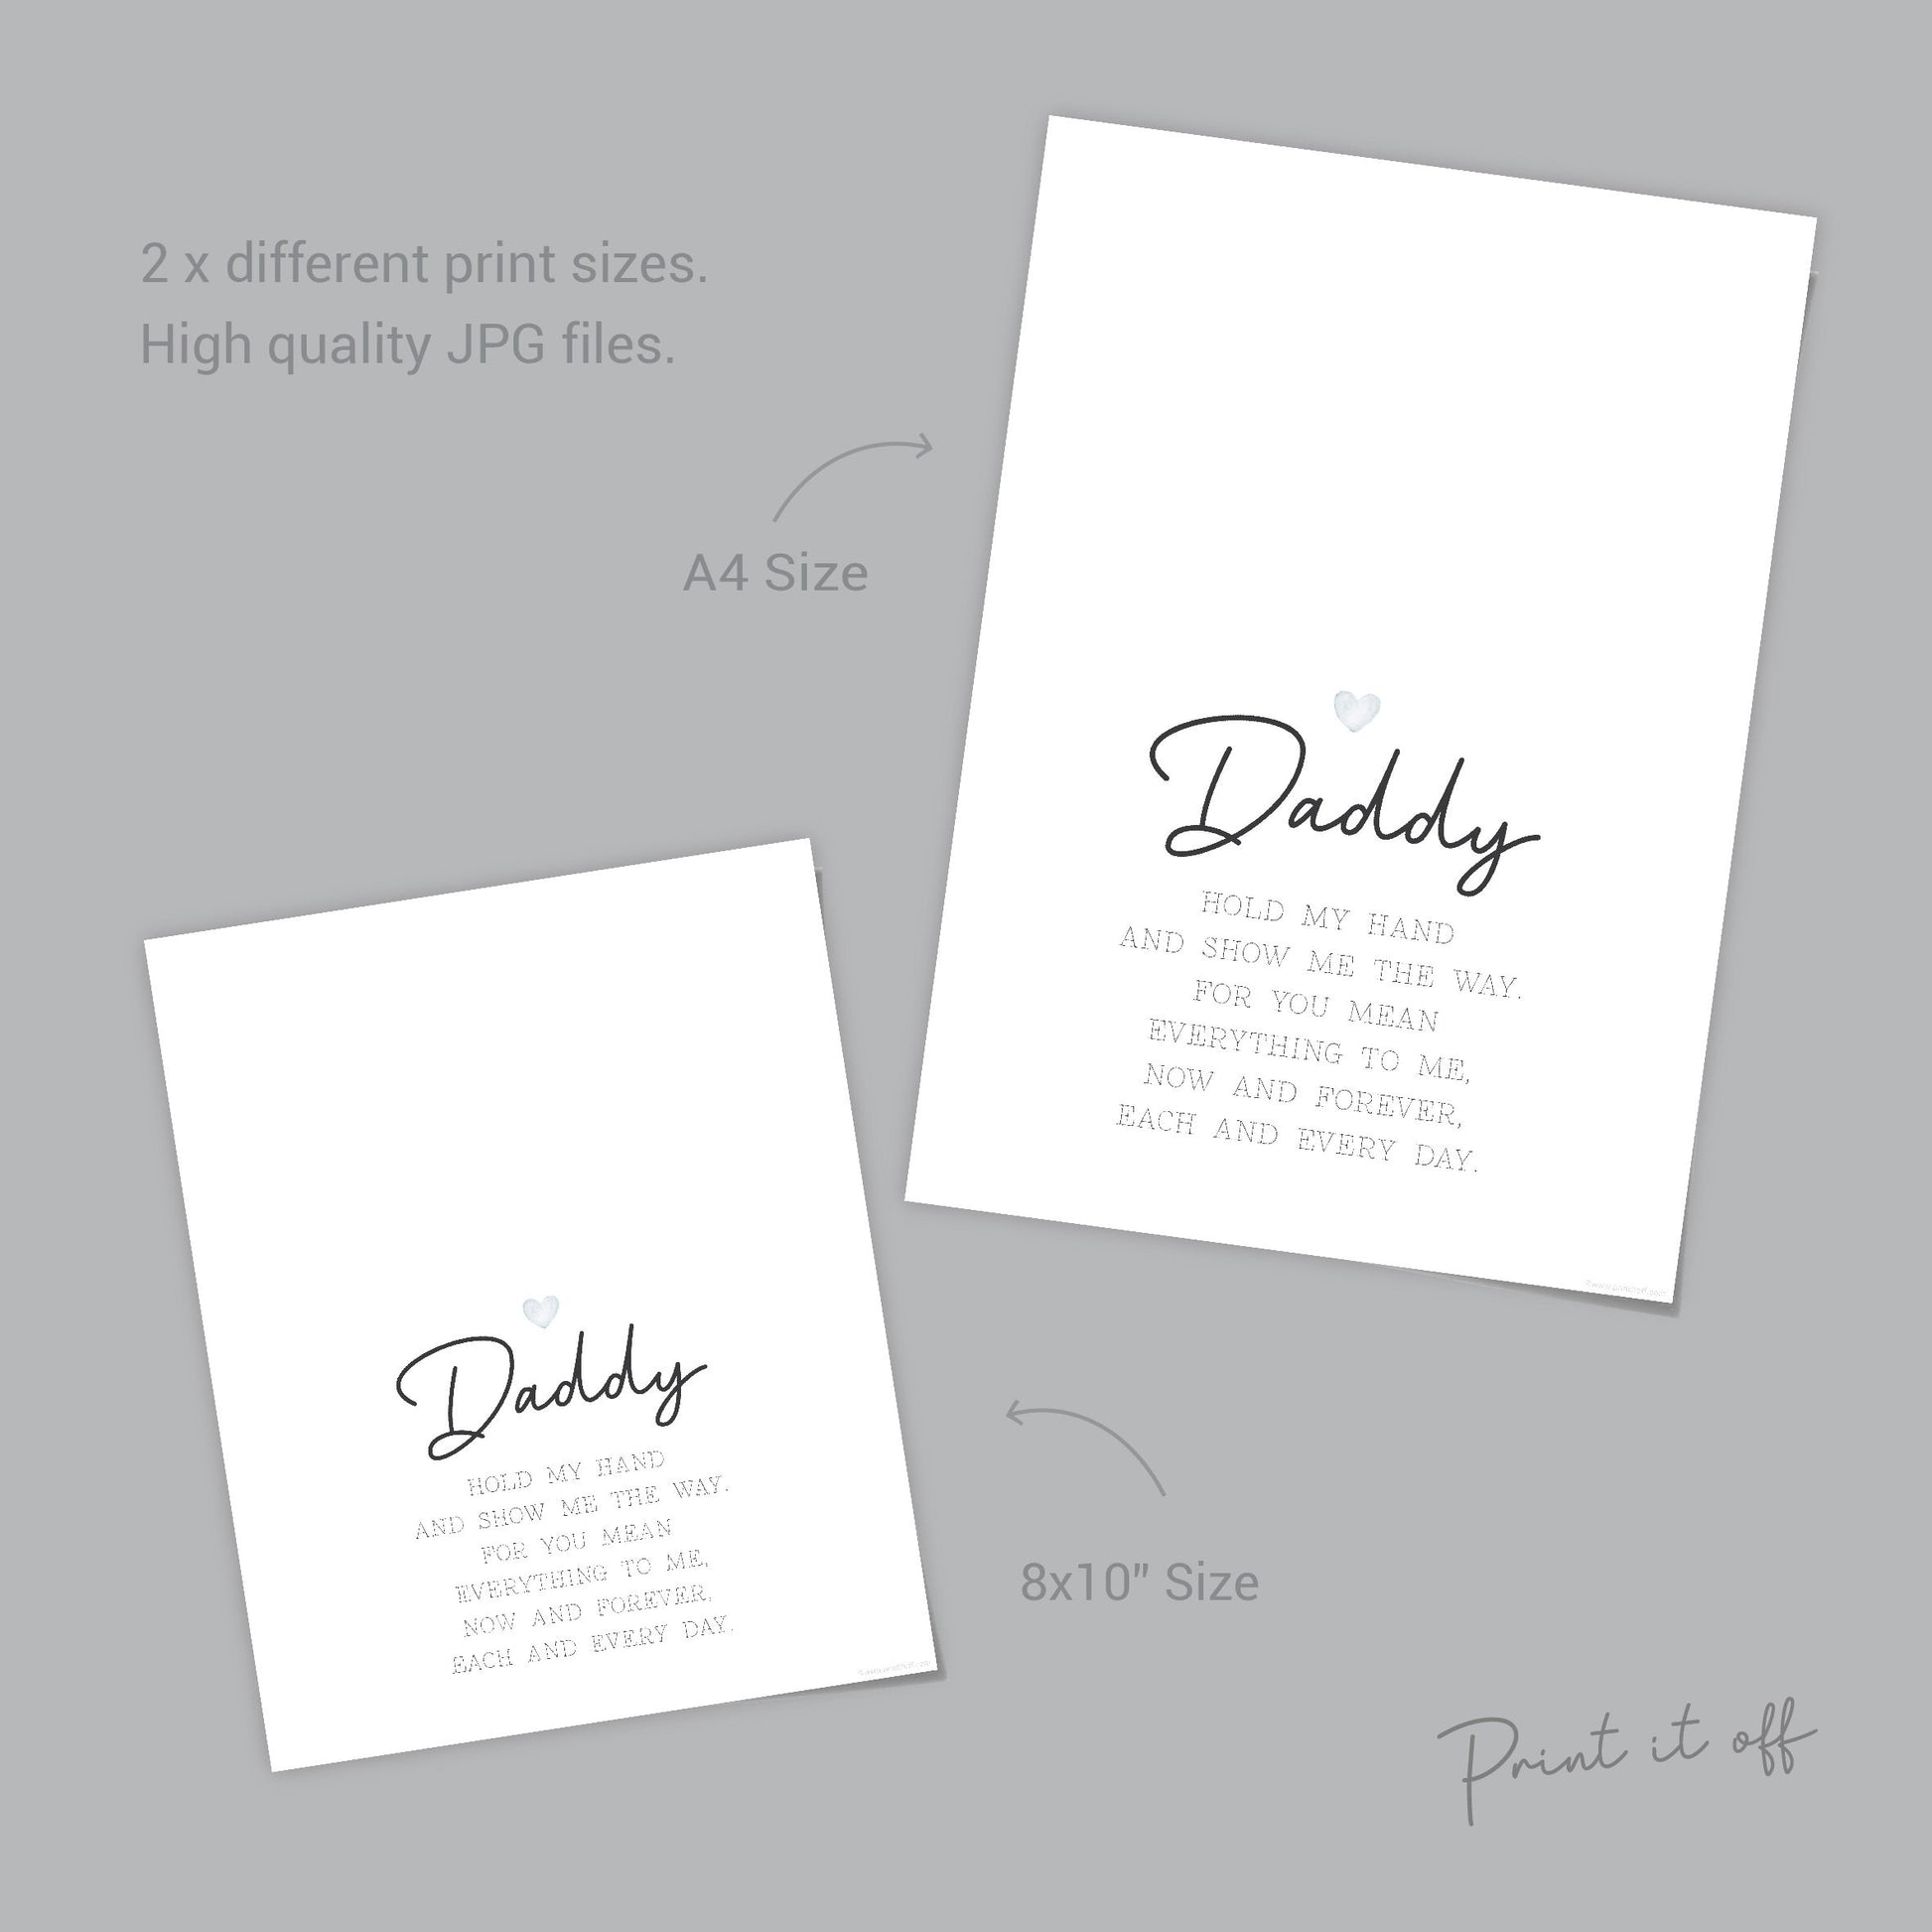 Daddy Handprint Poem / Hand Art Craft Dad Father's Day Birthday / Kids Baby Toddler / Activity Keepsake Gift Card Sign / PRINT IT OFF 0450